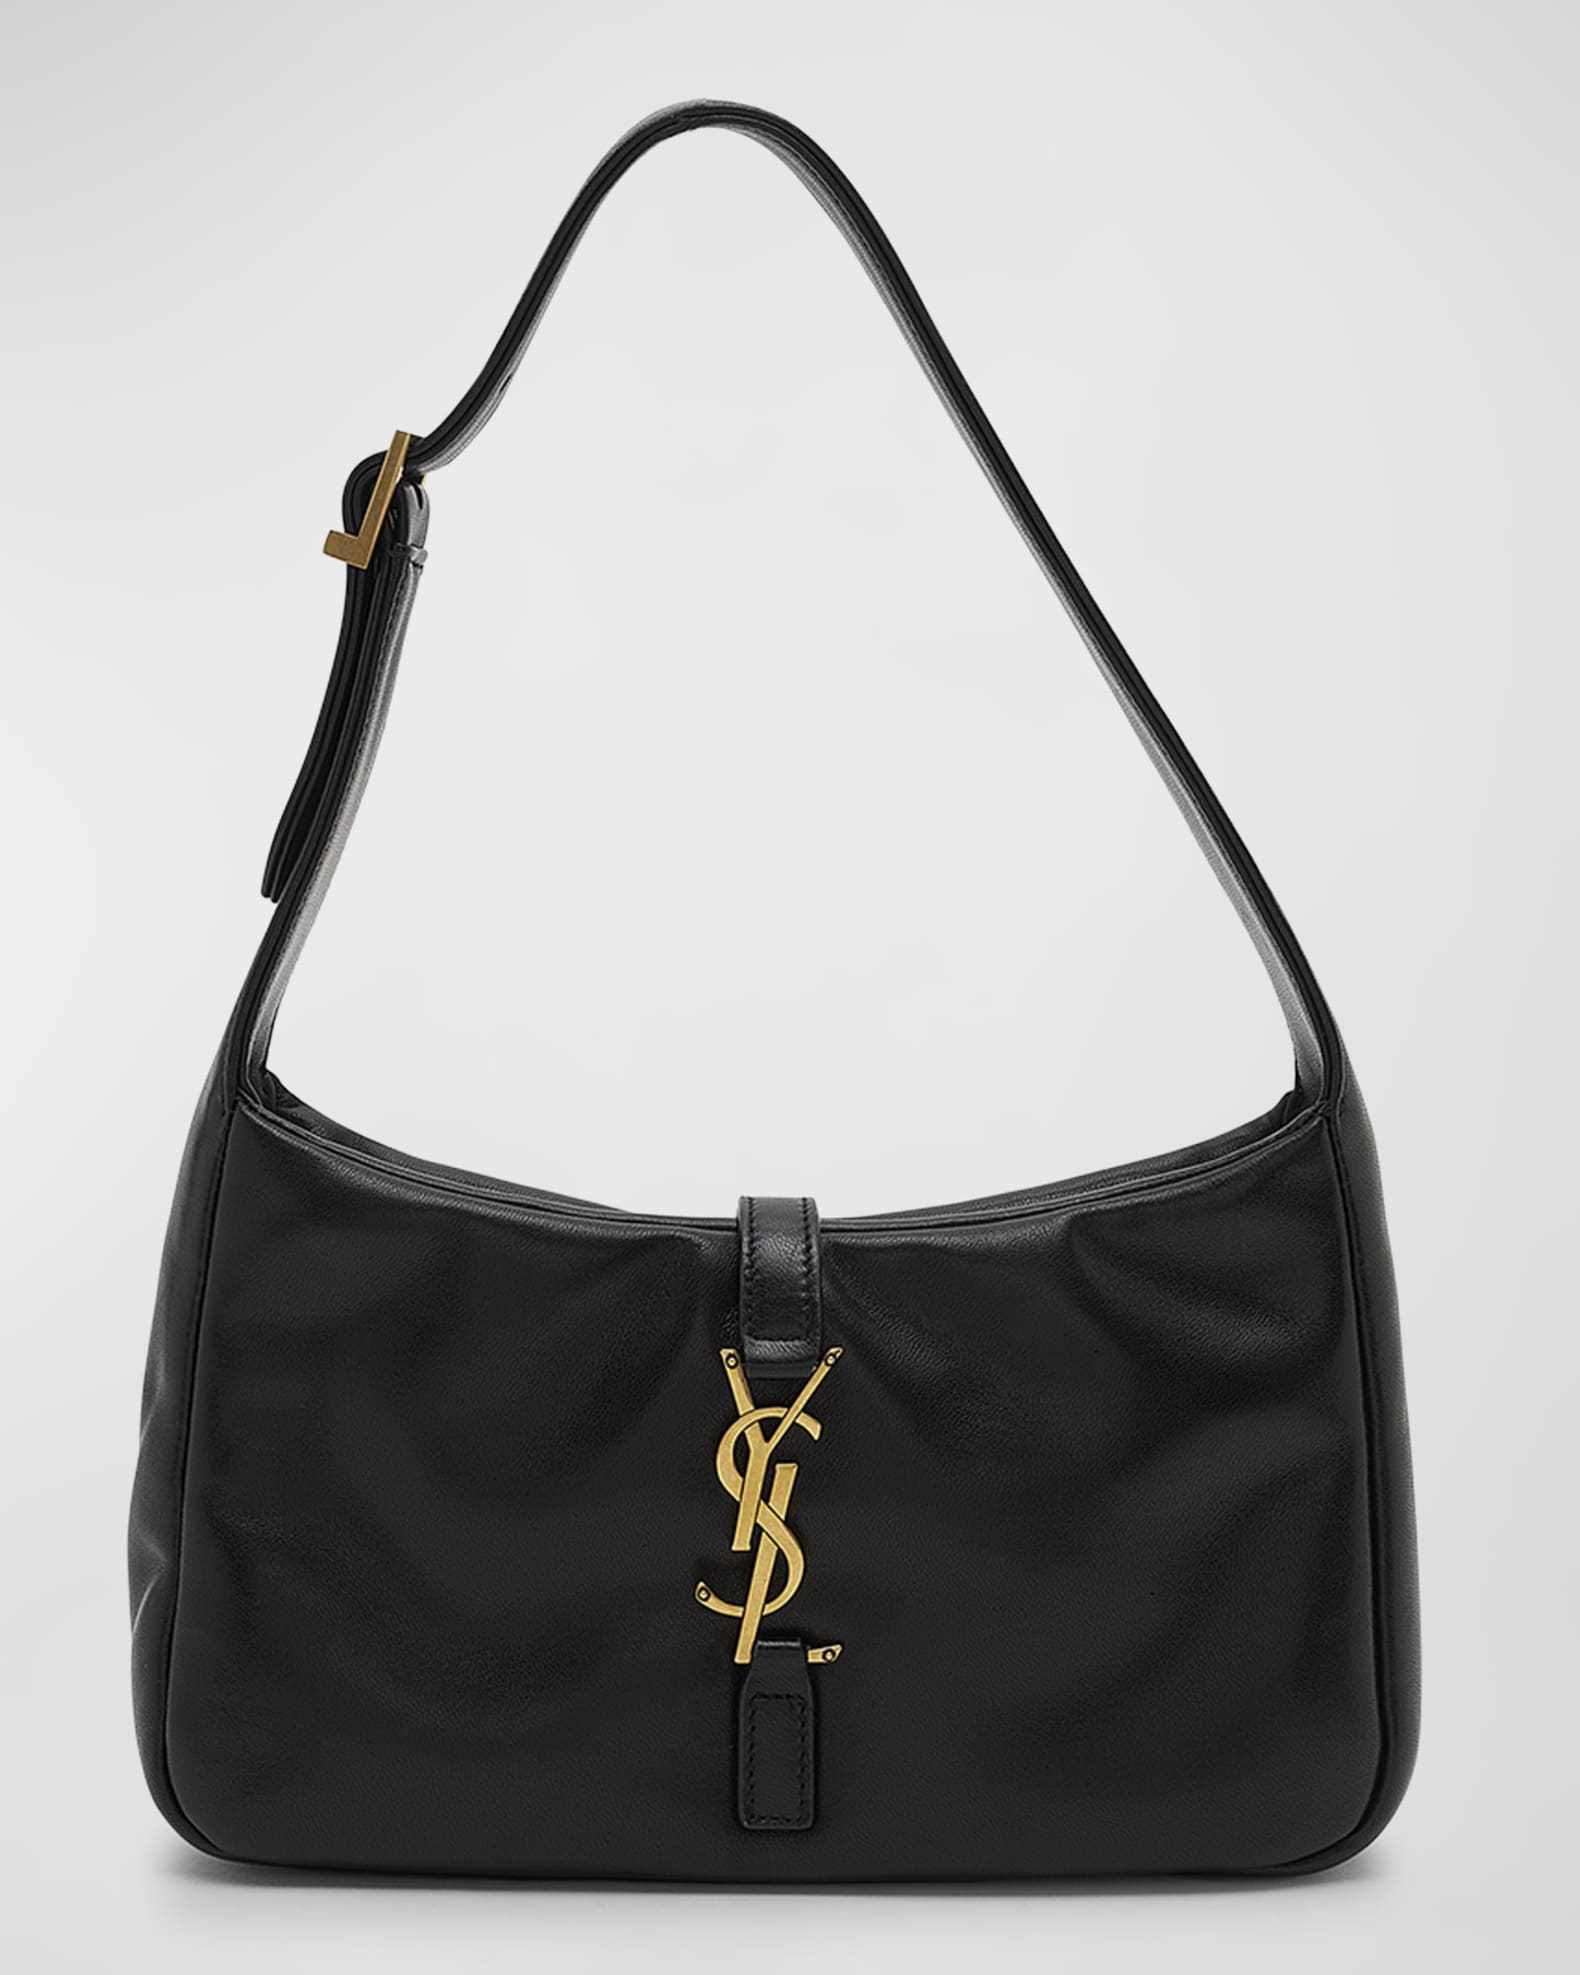 Celebs & YSL bags  Ysl bag, Ysl outfits women, Ysl bag black